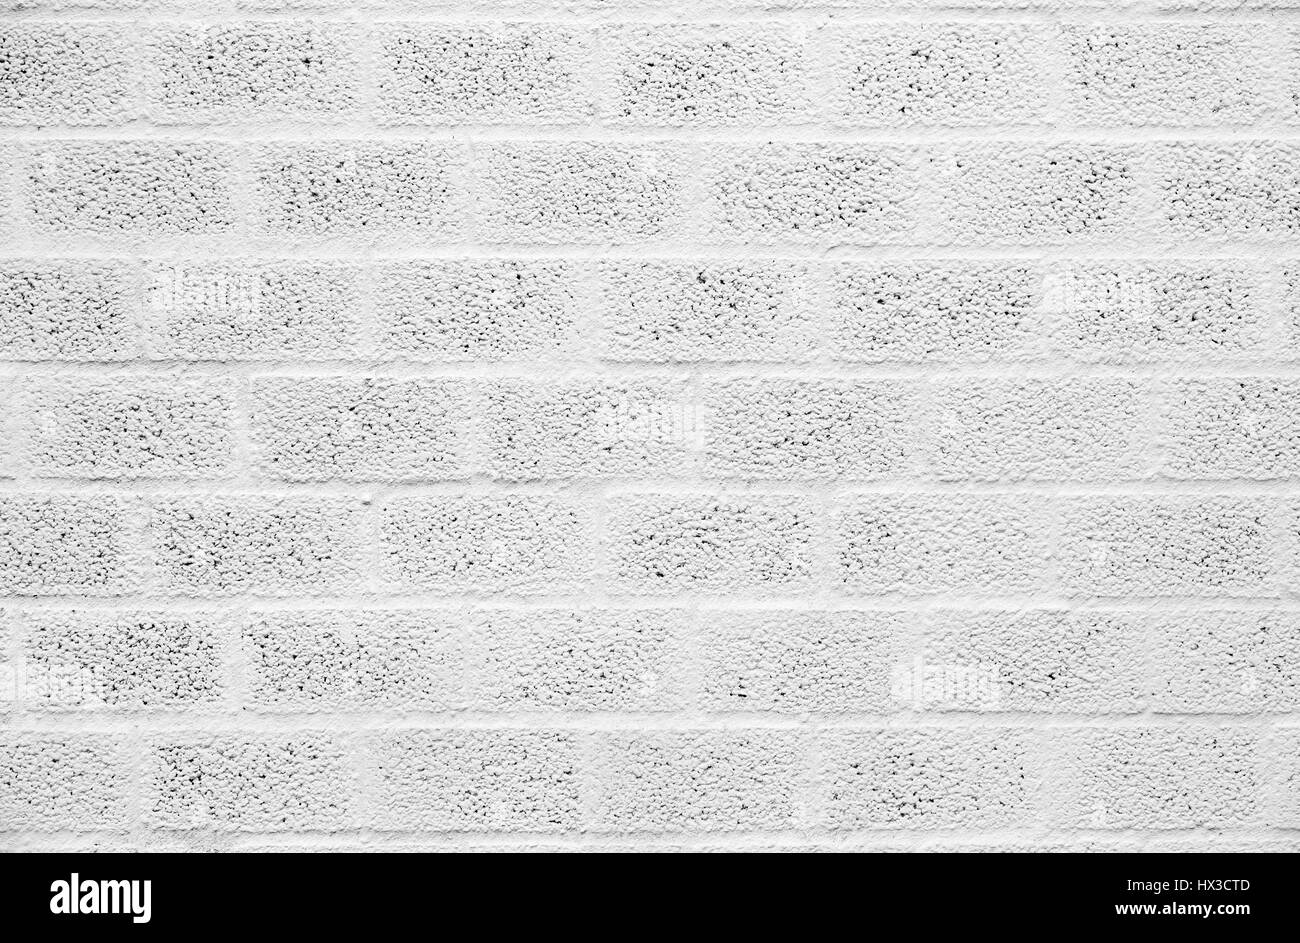 White Painted Concrete Block Wall Stock Photo 136529581 Alamy